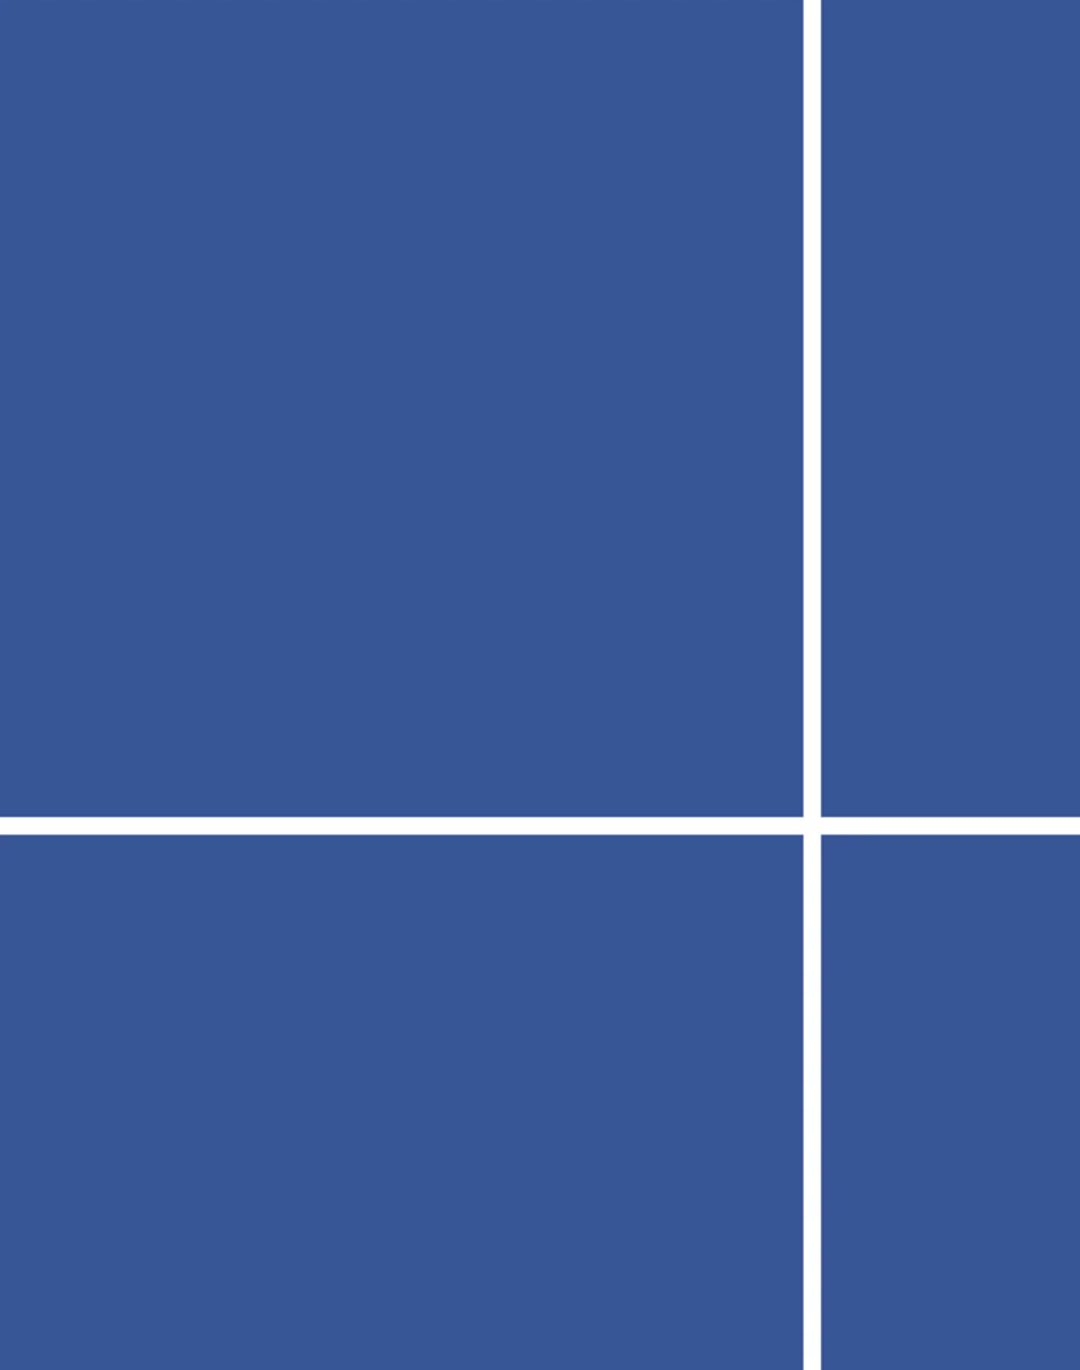 Grid - Large Thin, Line: White | Background: Blue